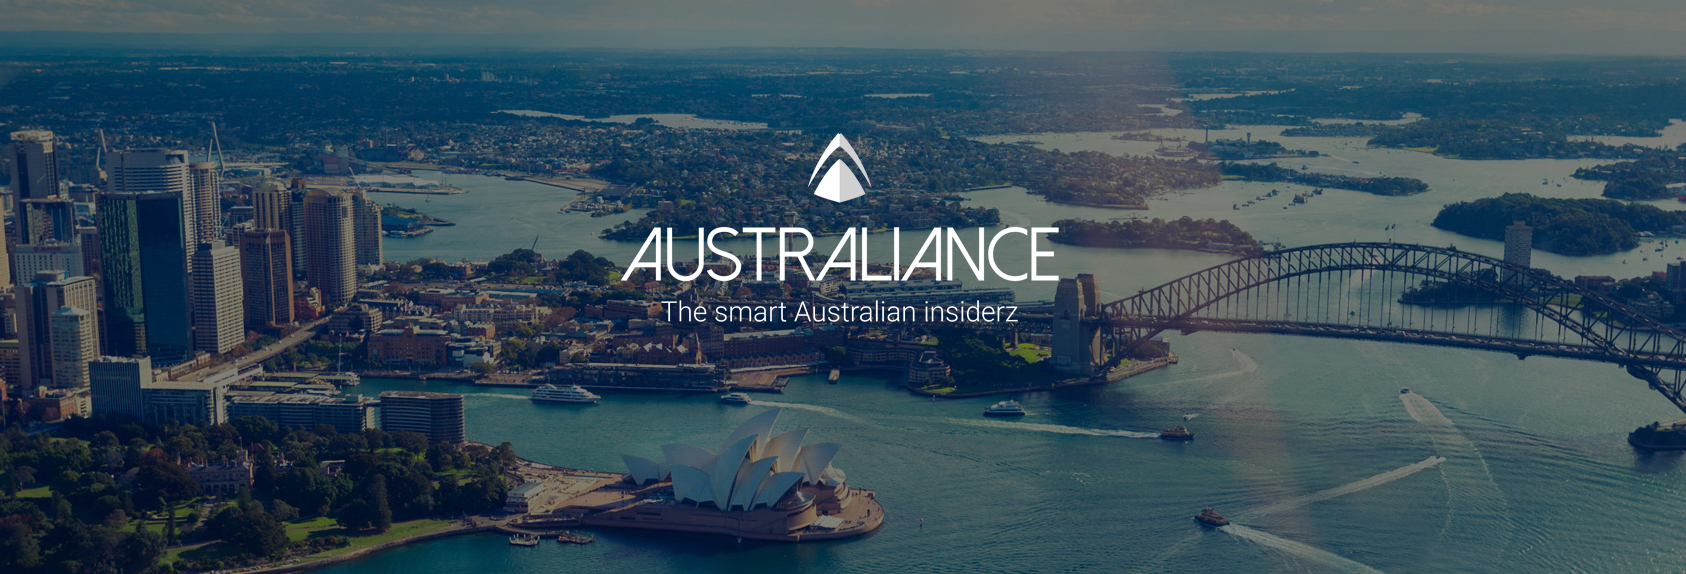 logo australiance